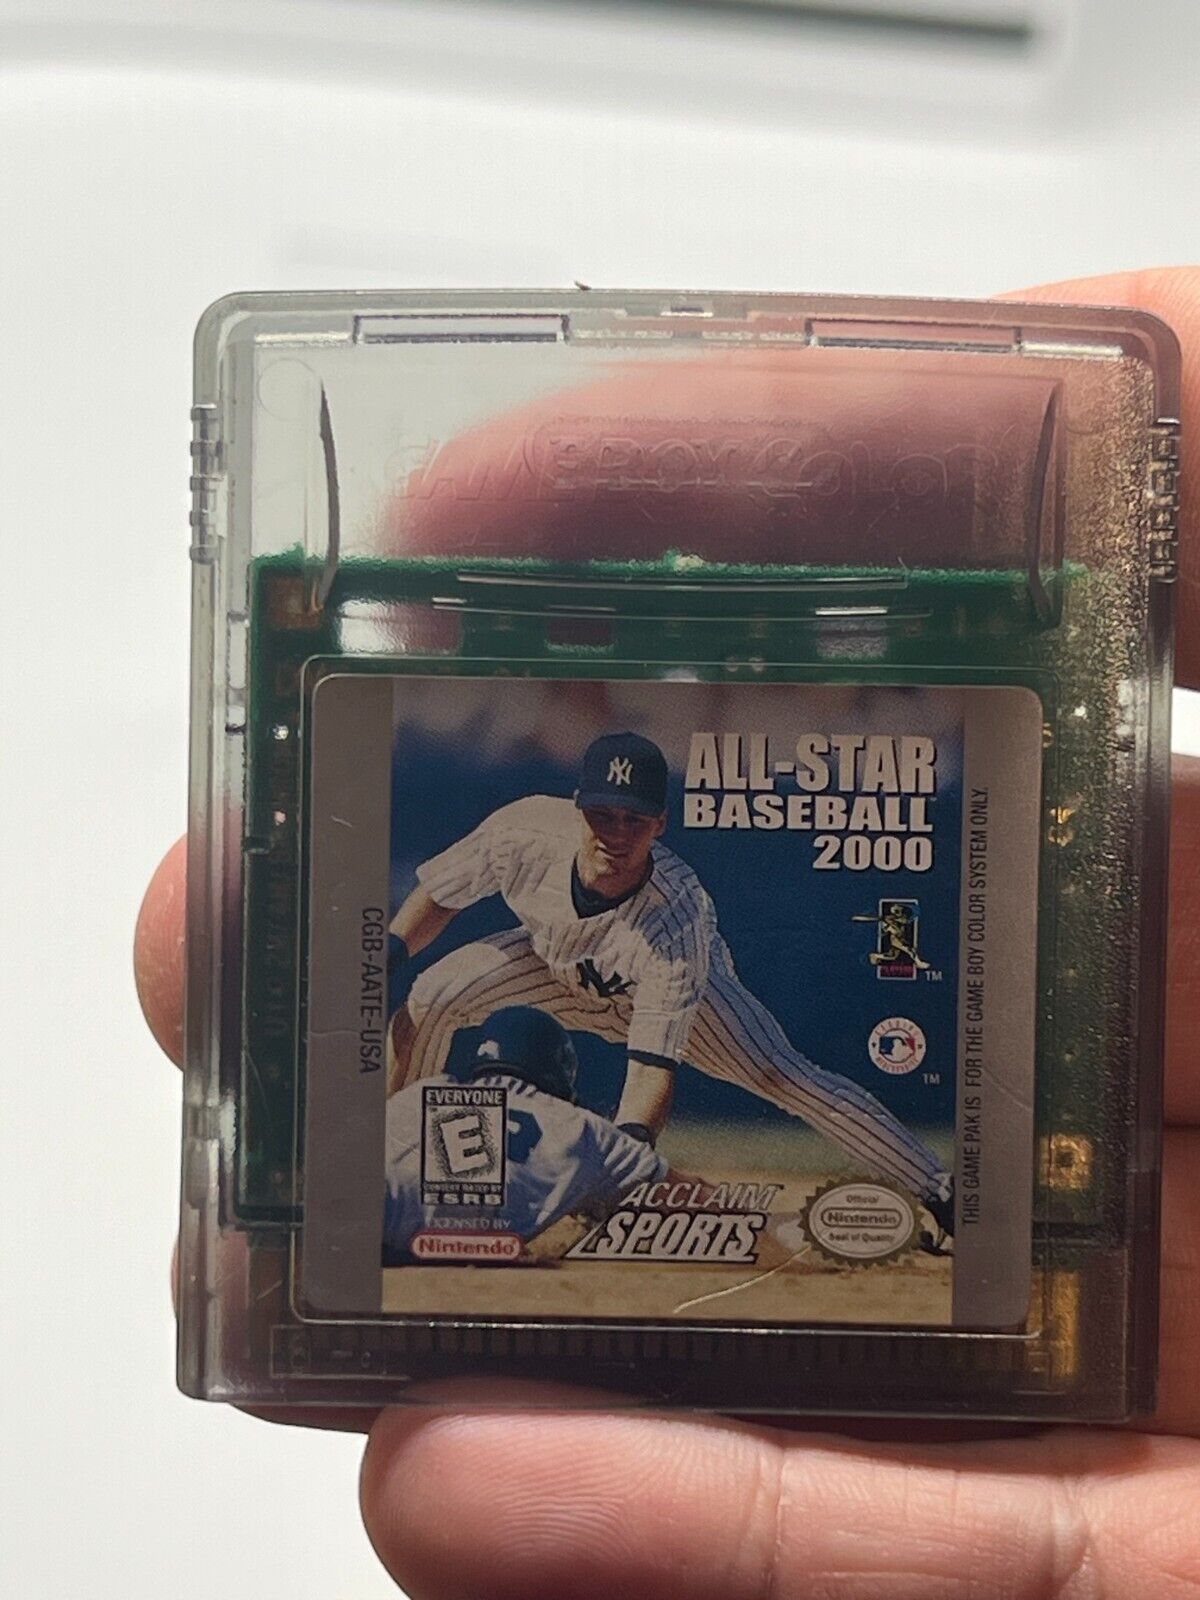 All-Star Baseball 2000 (Nintendo Game Boy Color, 1999) - Tested